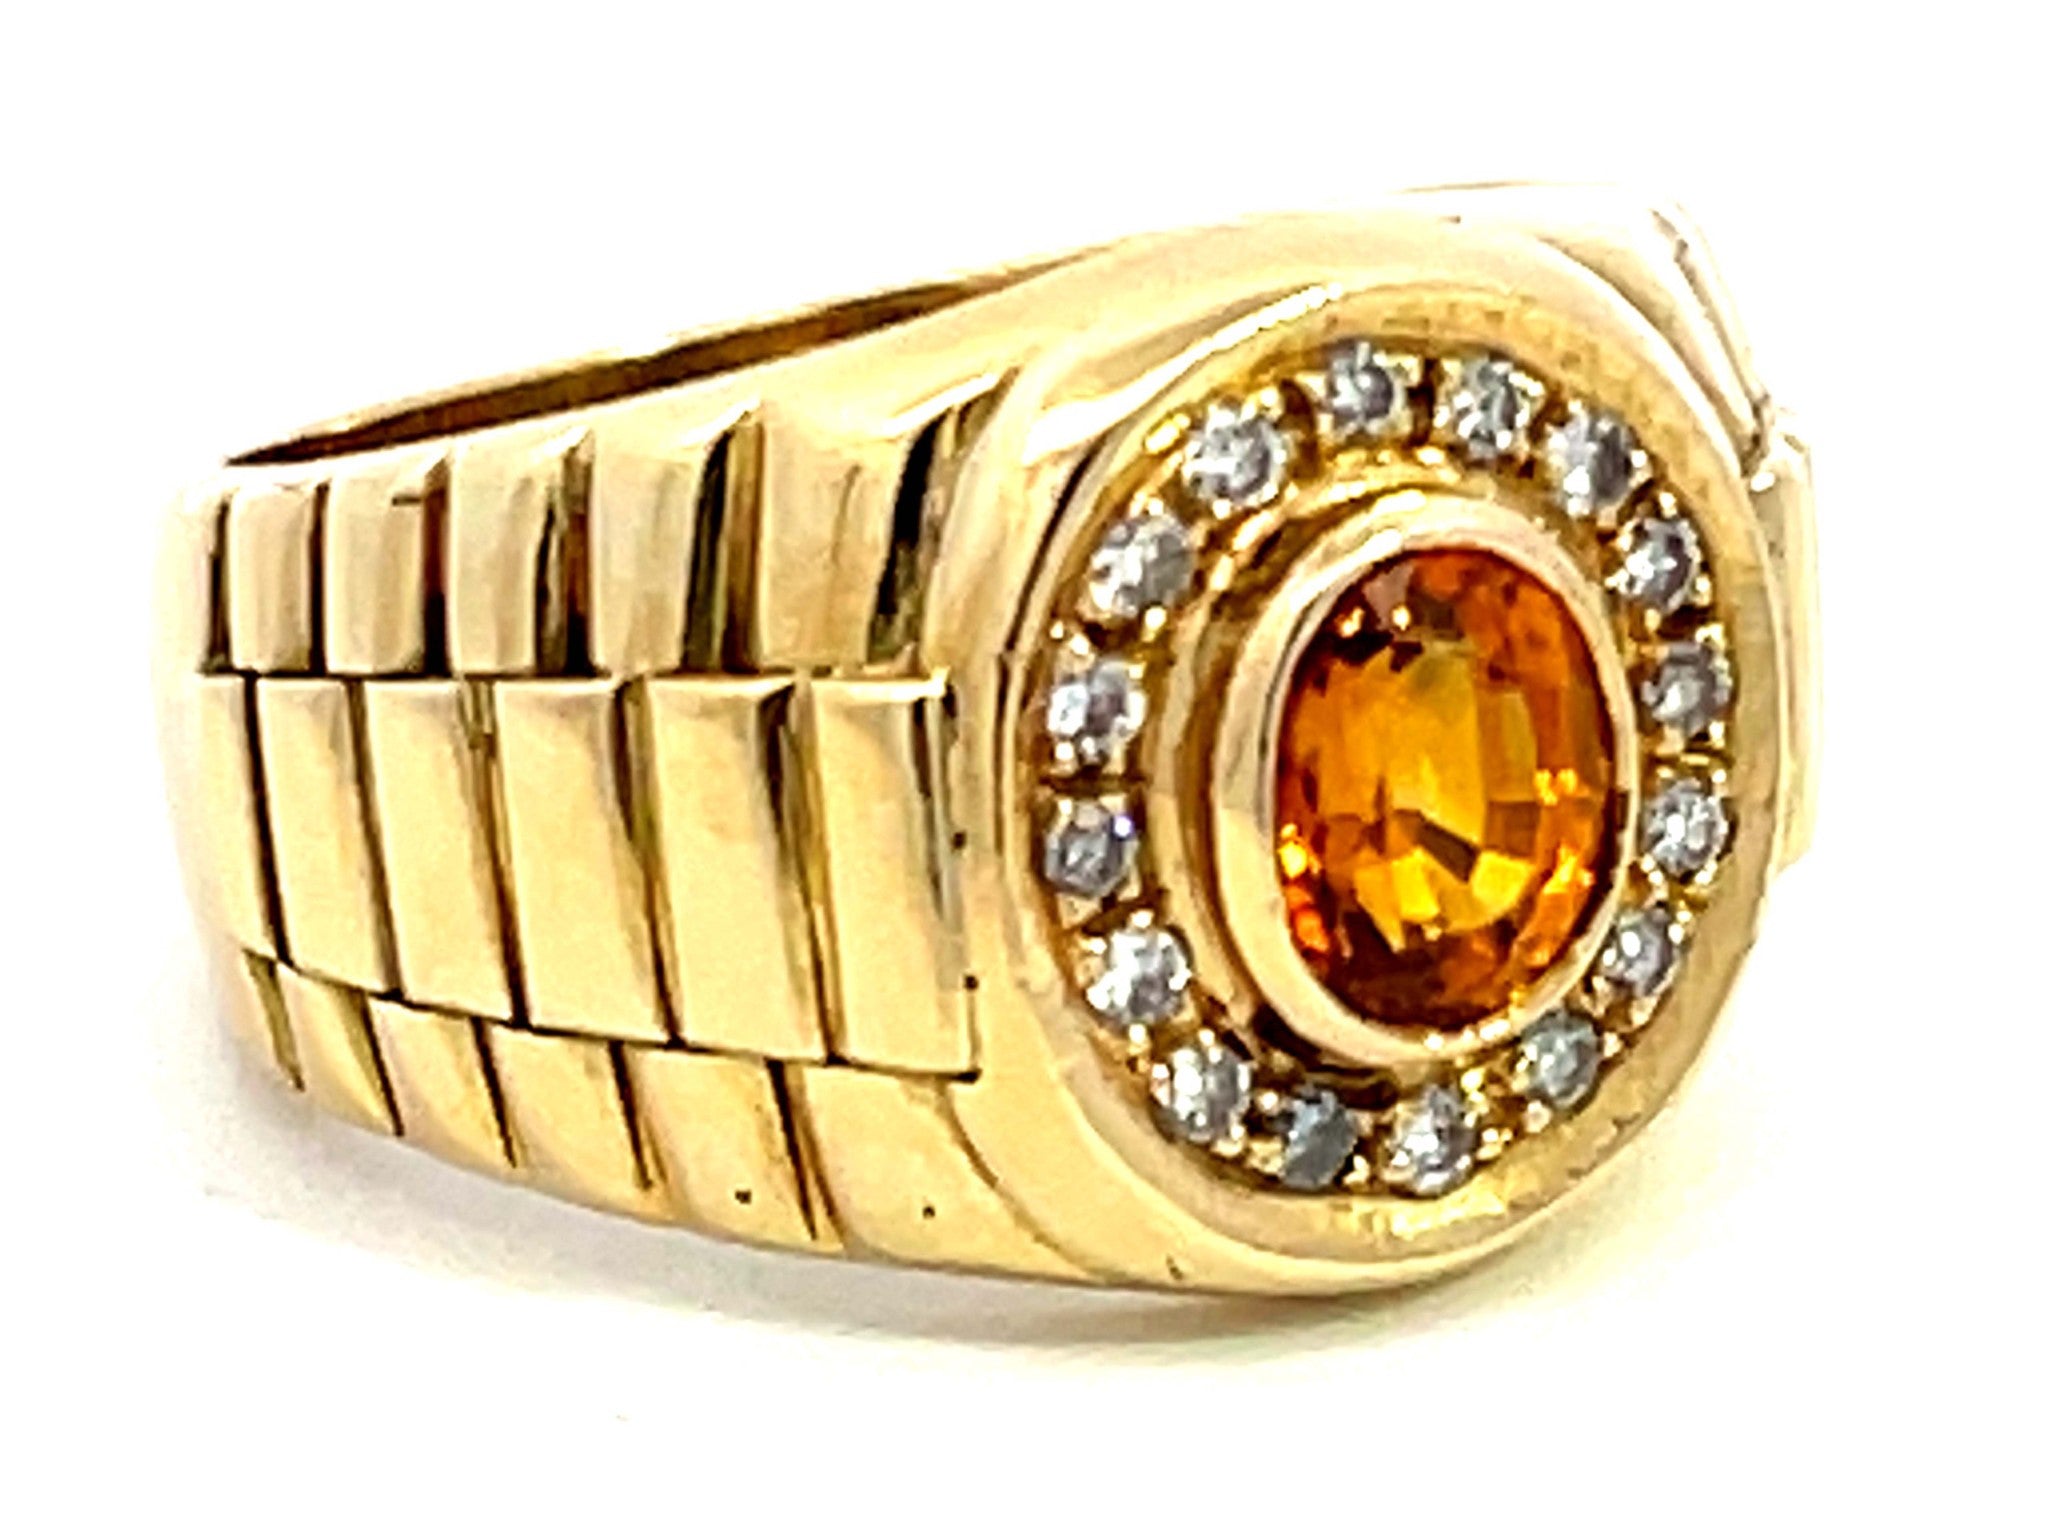 Vintage Citrine Diamond Halo Rolex Ring in 14k Yellow Gold